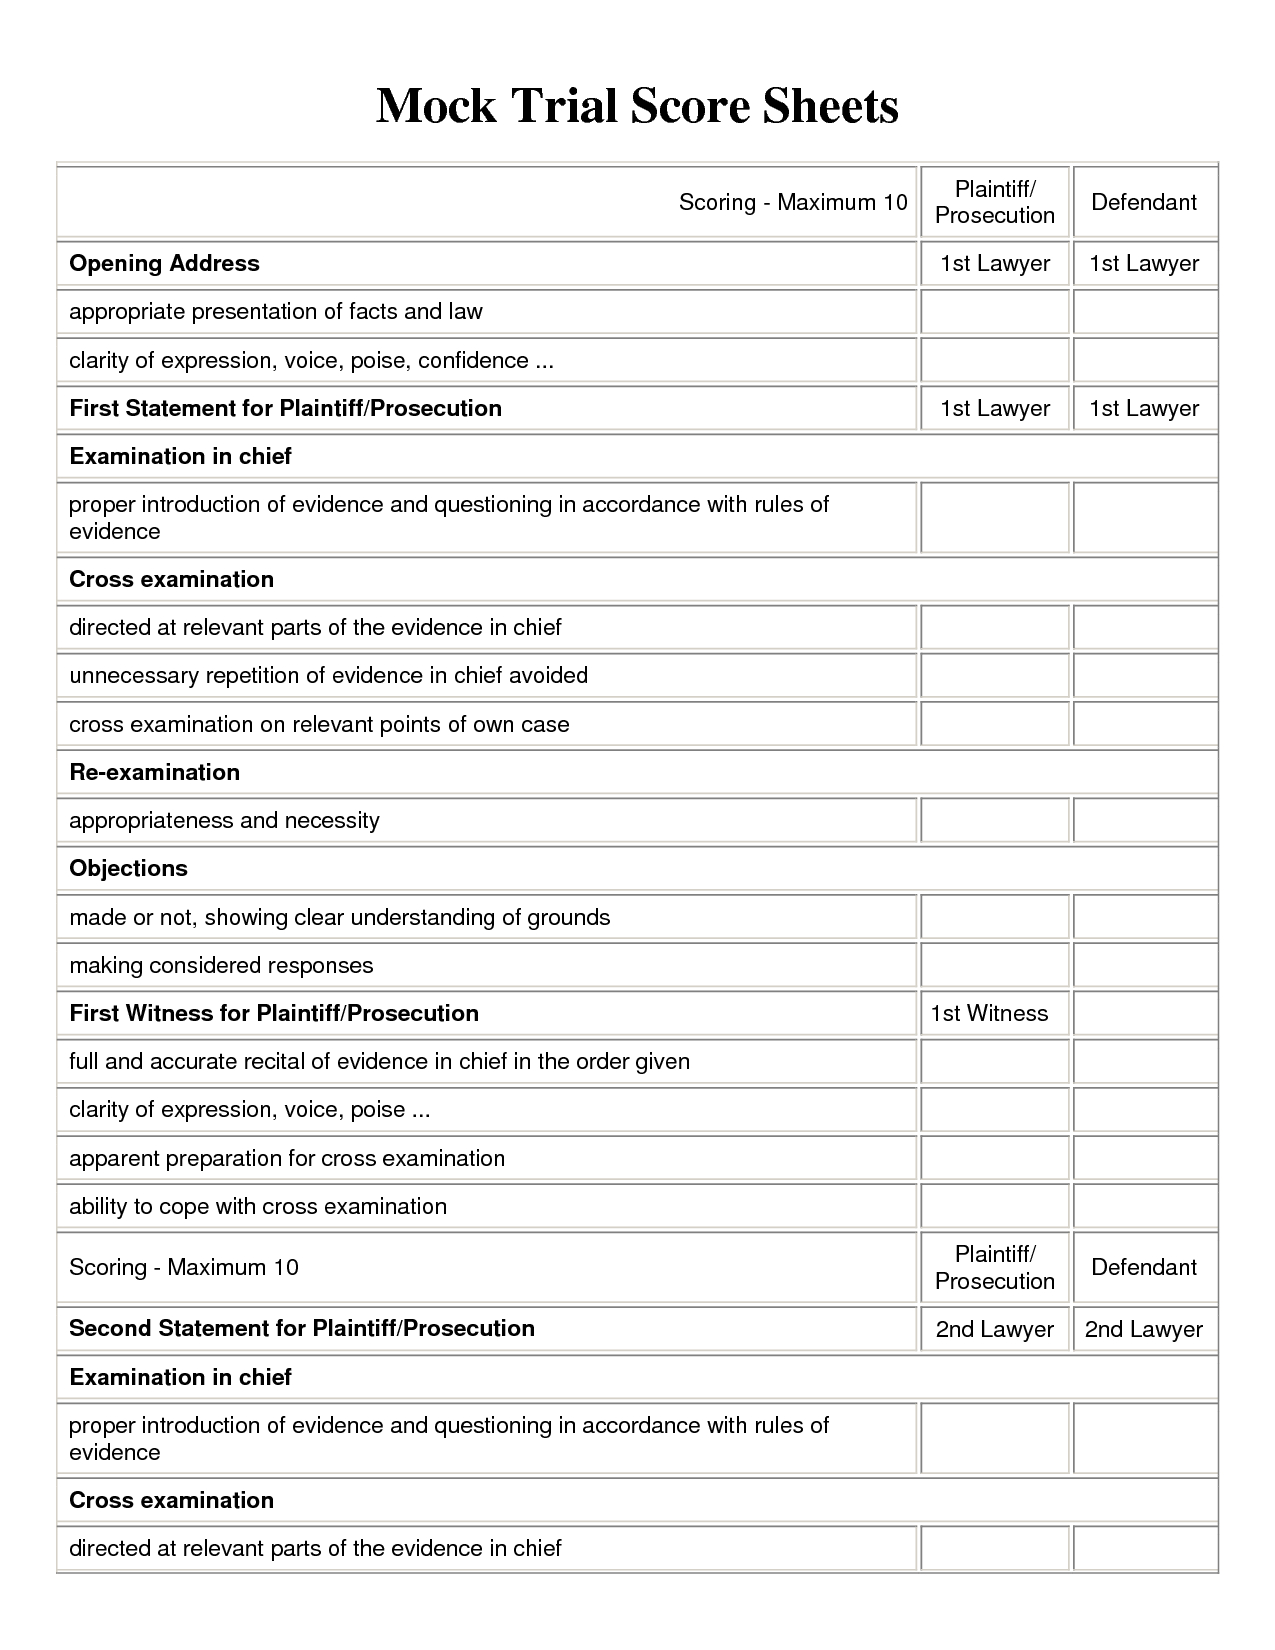 Mock Trial Opening Statement Worksheet | Mock Trial Score Sheets throughout Debate Opening Statement Template